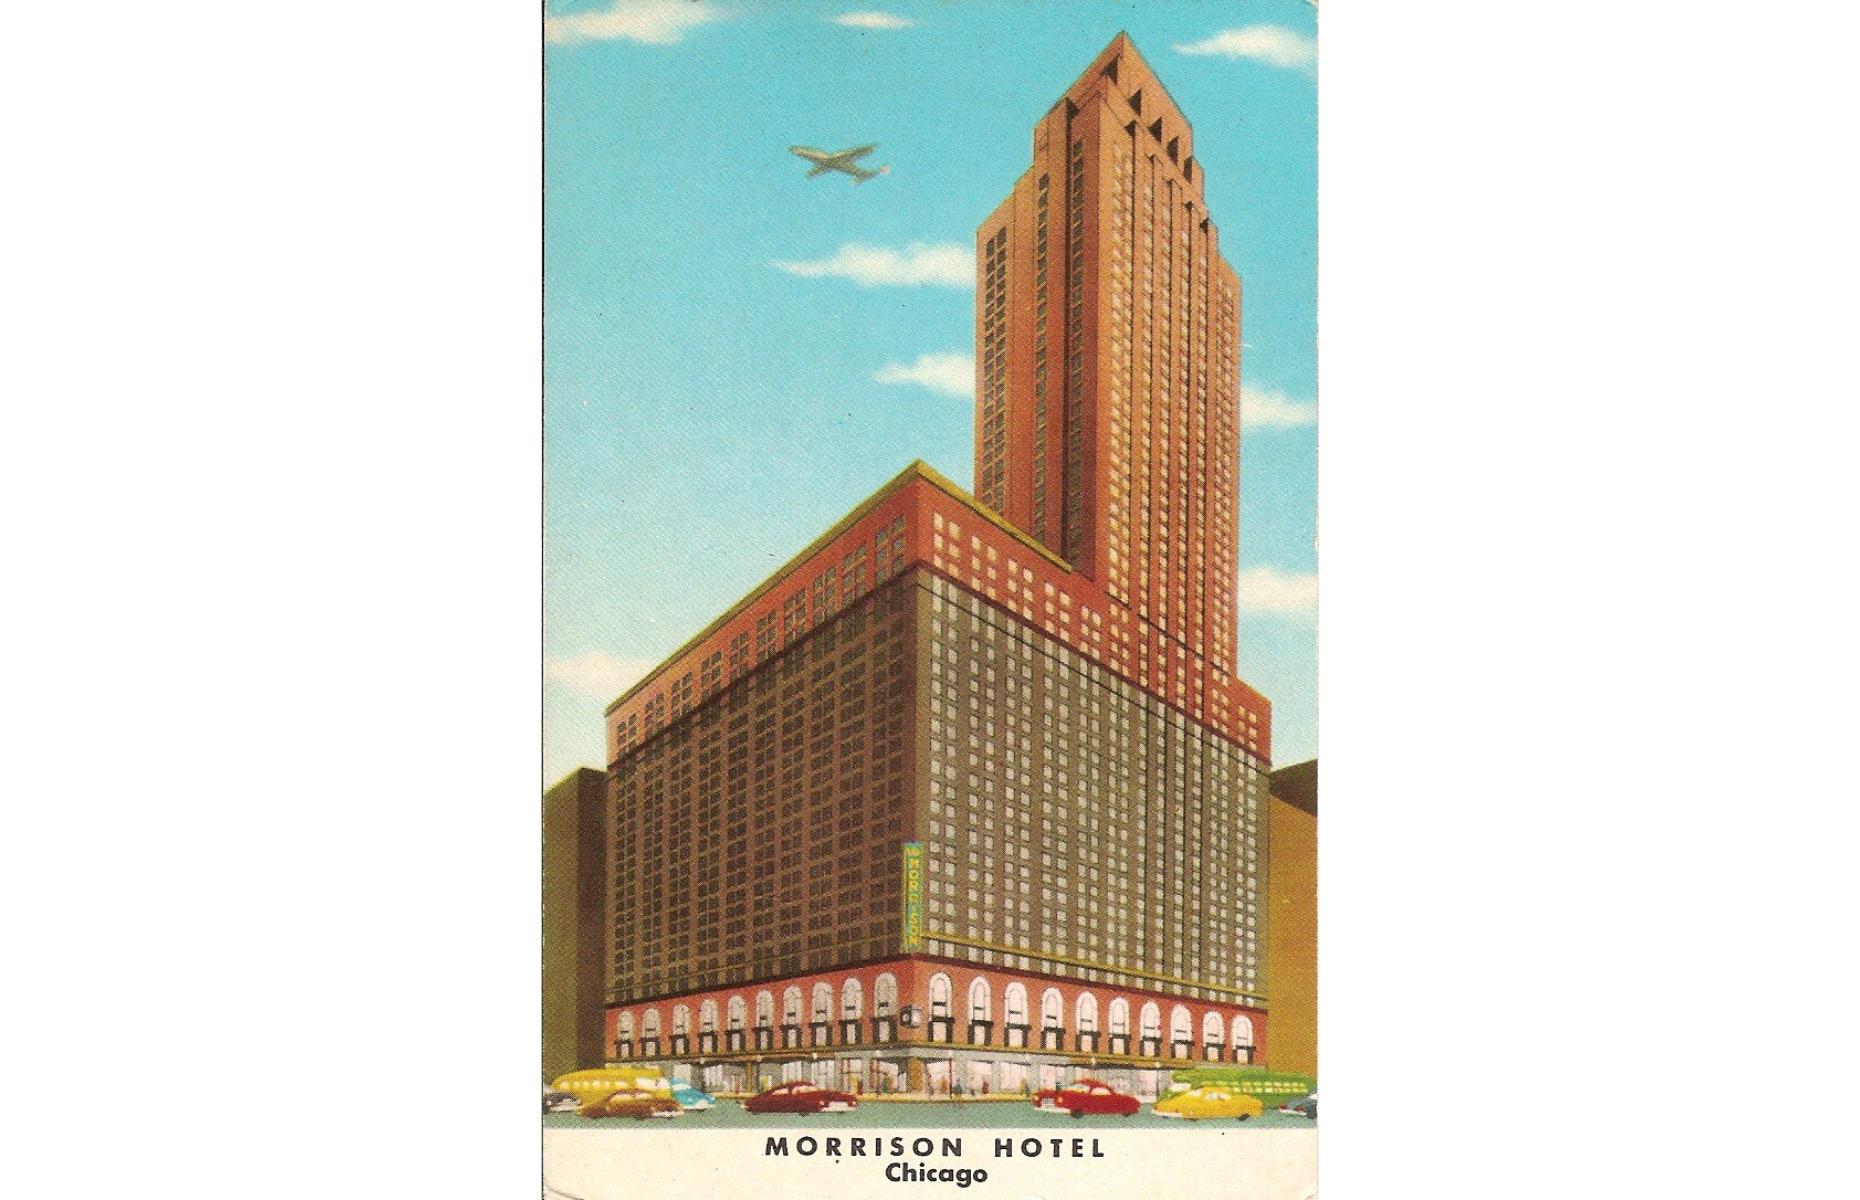 Morrison Hotel, Chicago